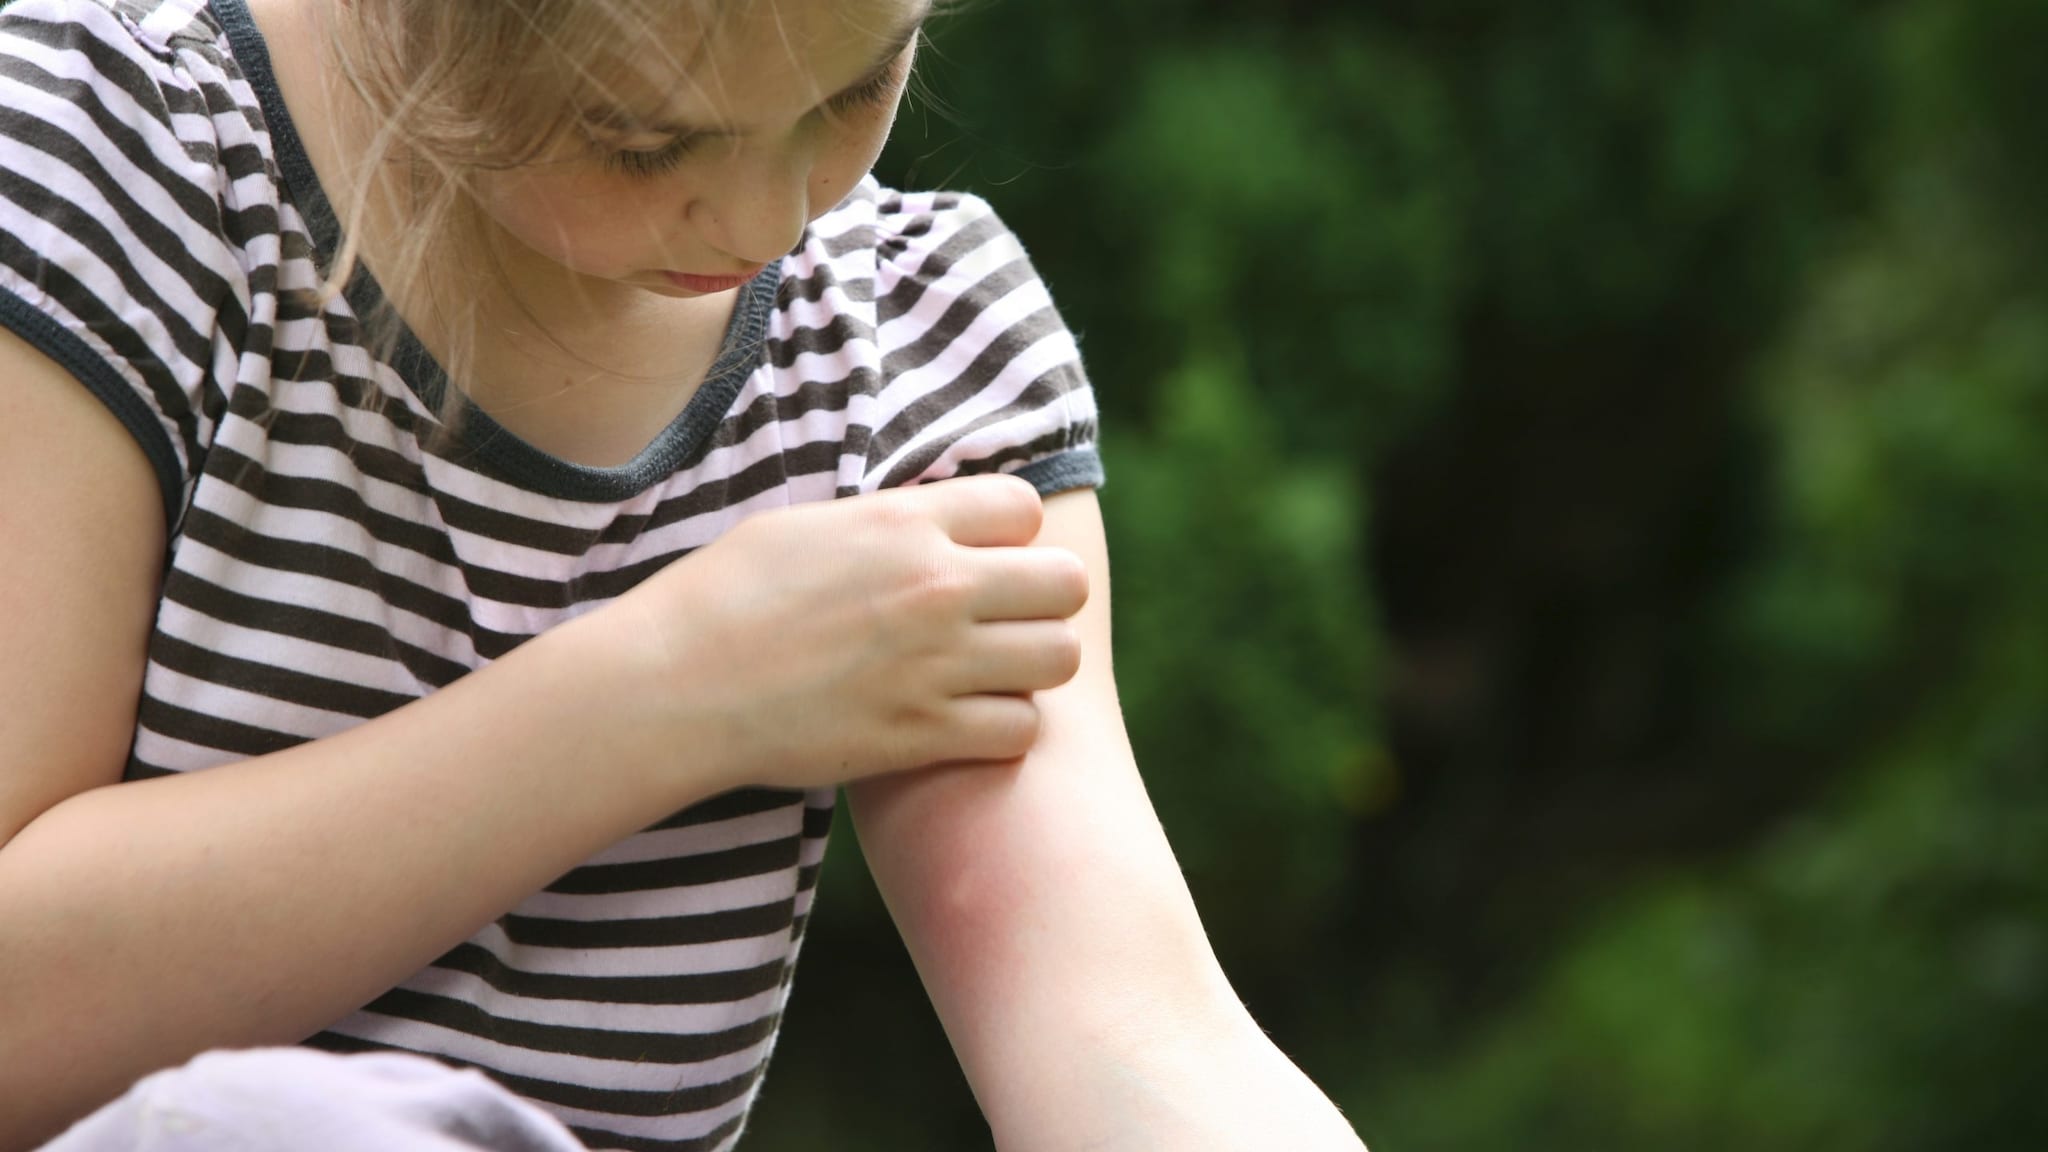 Child scratching a mosquito bite